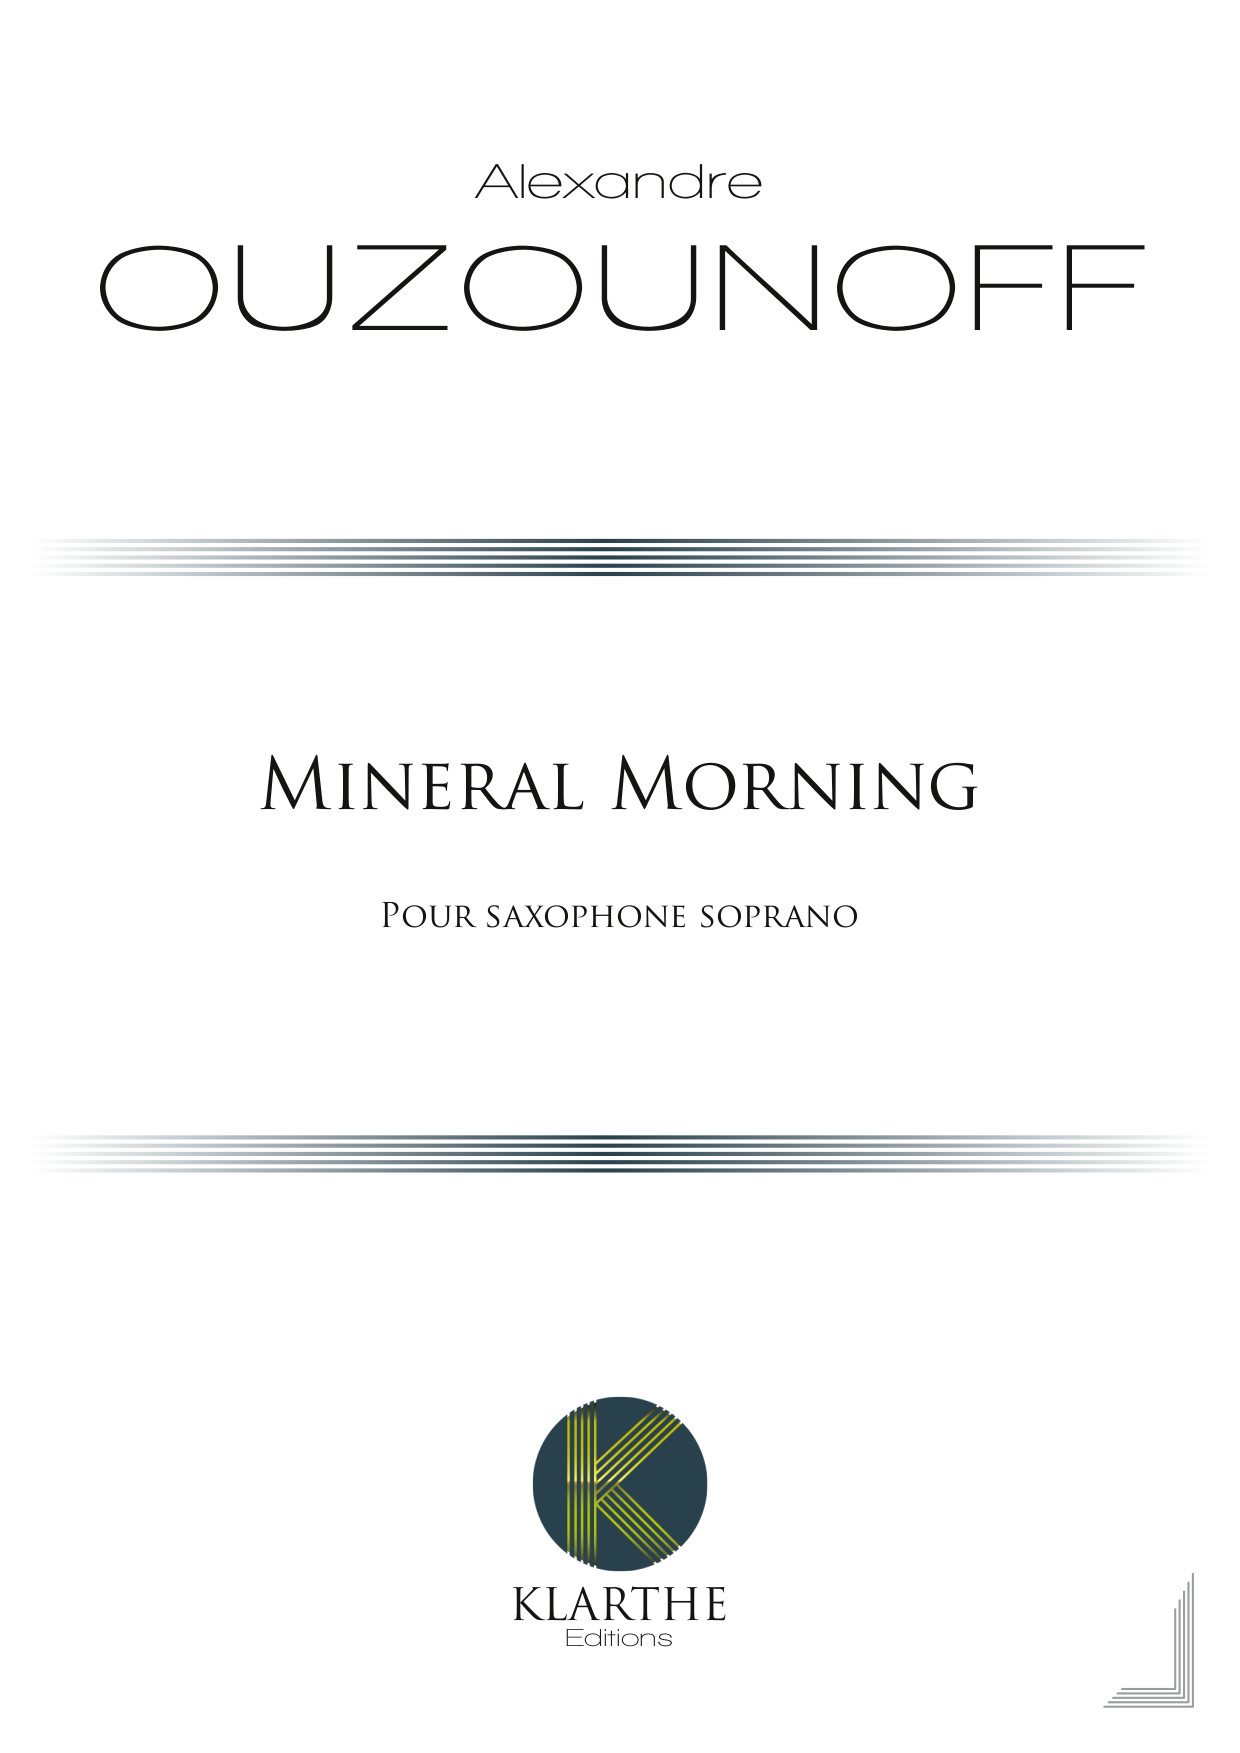 Mineral Morning (OUZOUNOFF ALEXANDRE)